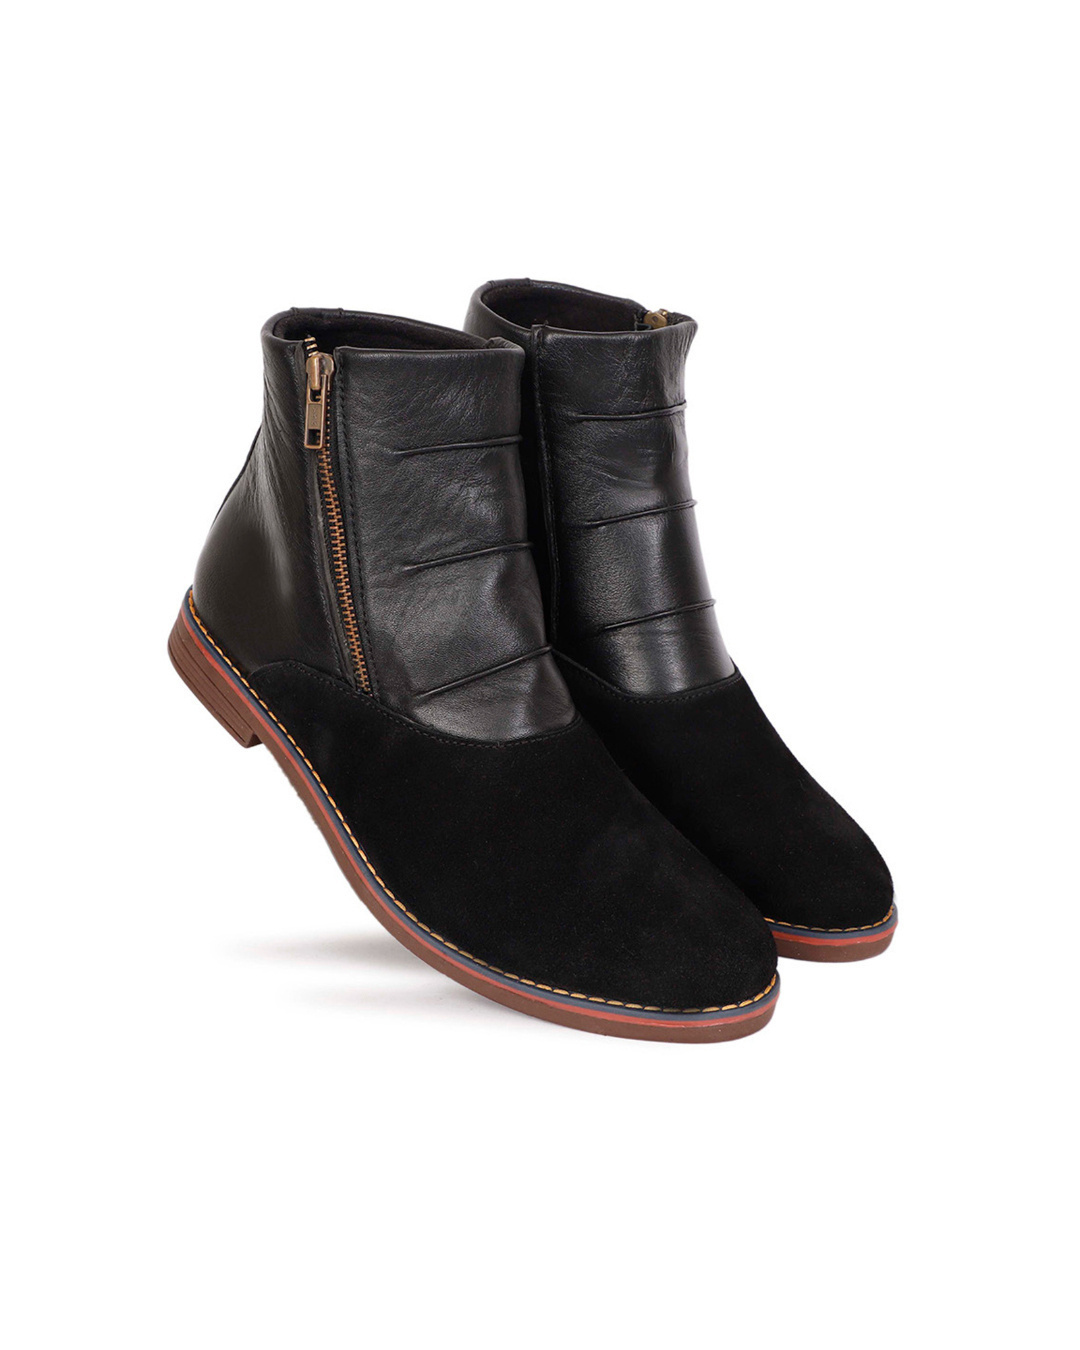 Buy Men's Black Textured Leather Flat Boots Online in India at Bewakoof